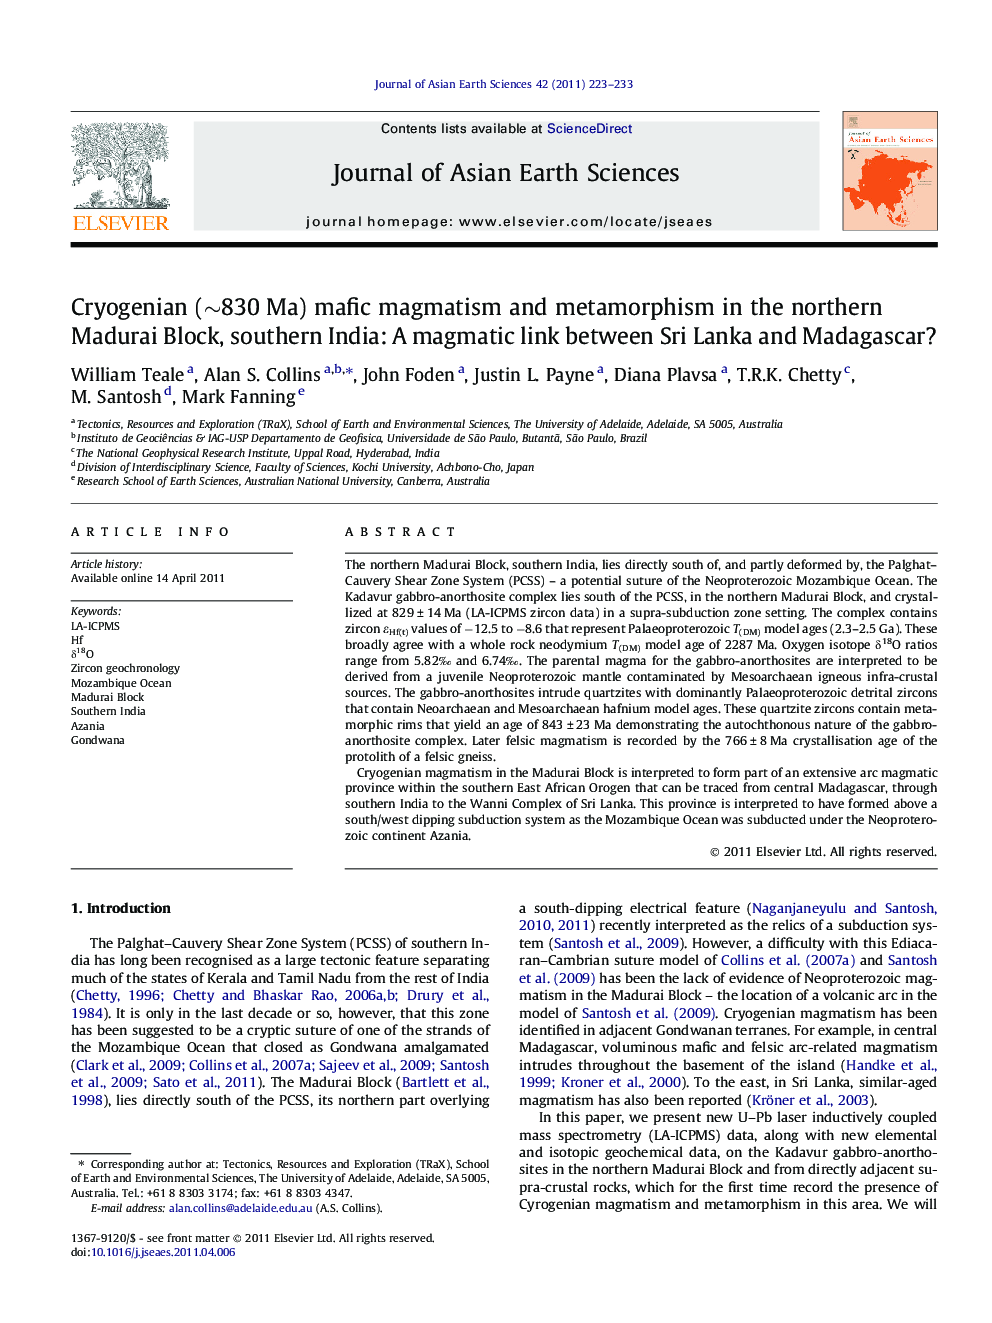 Cryogenian (∼830 Ma) mafic magmatism and metamorphism in the northern Madurai Block, southern India: A magmatic link between Sri Lanka and Madagascar?